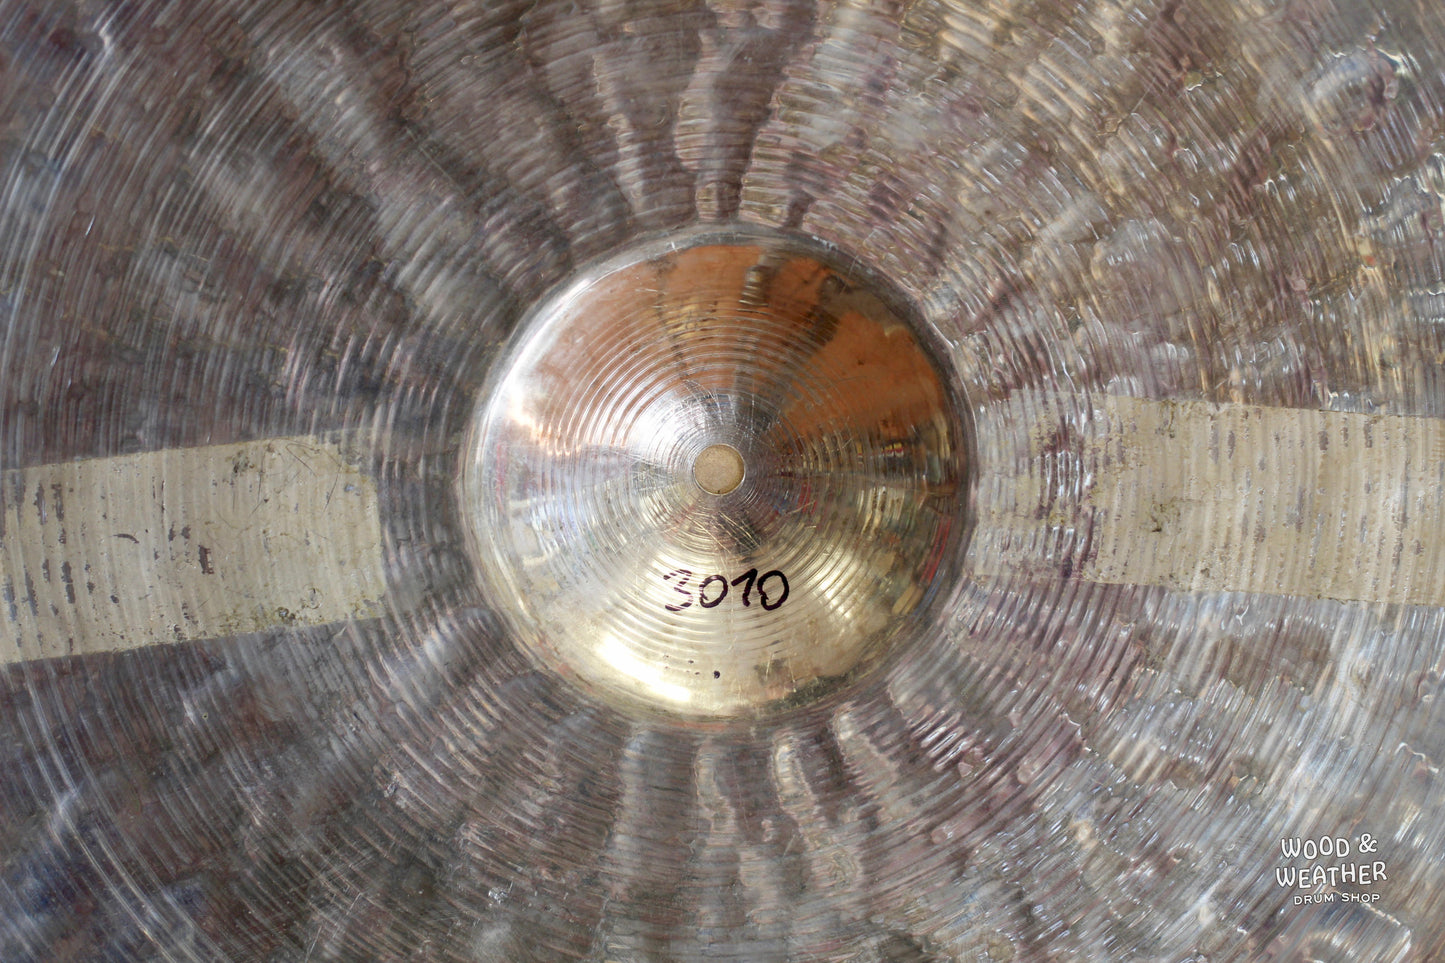 Used Sabian 22" Vault Medium Brilliant Ride Cymbal 3070g